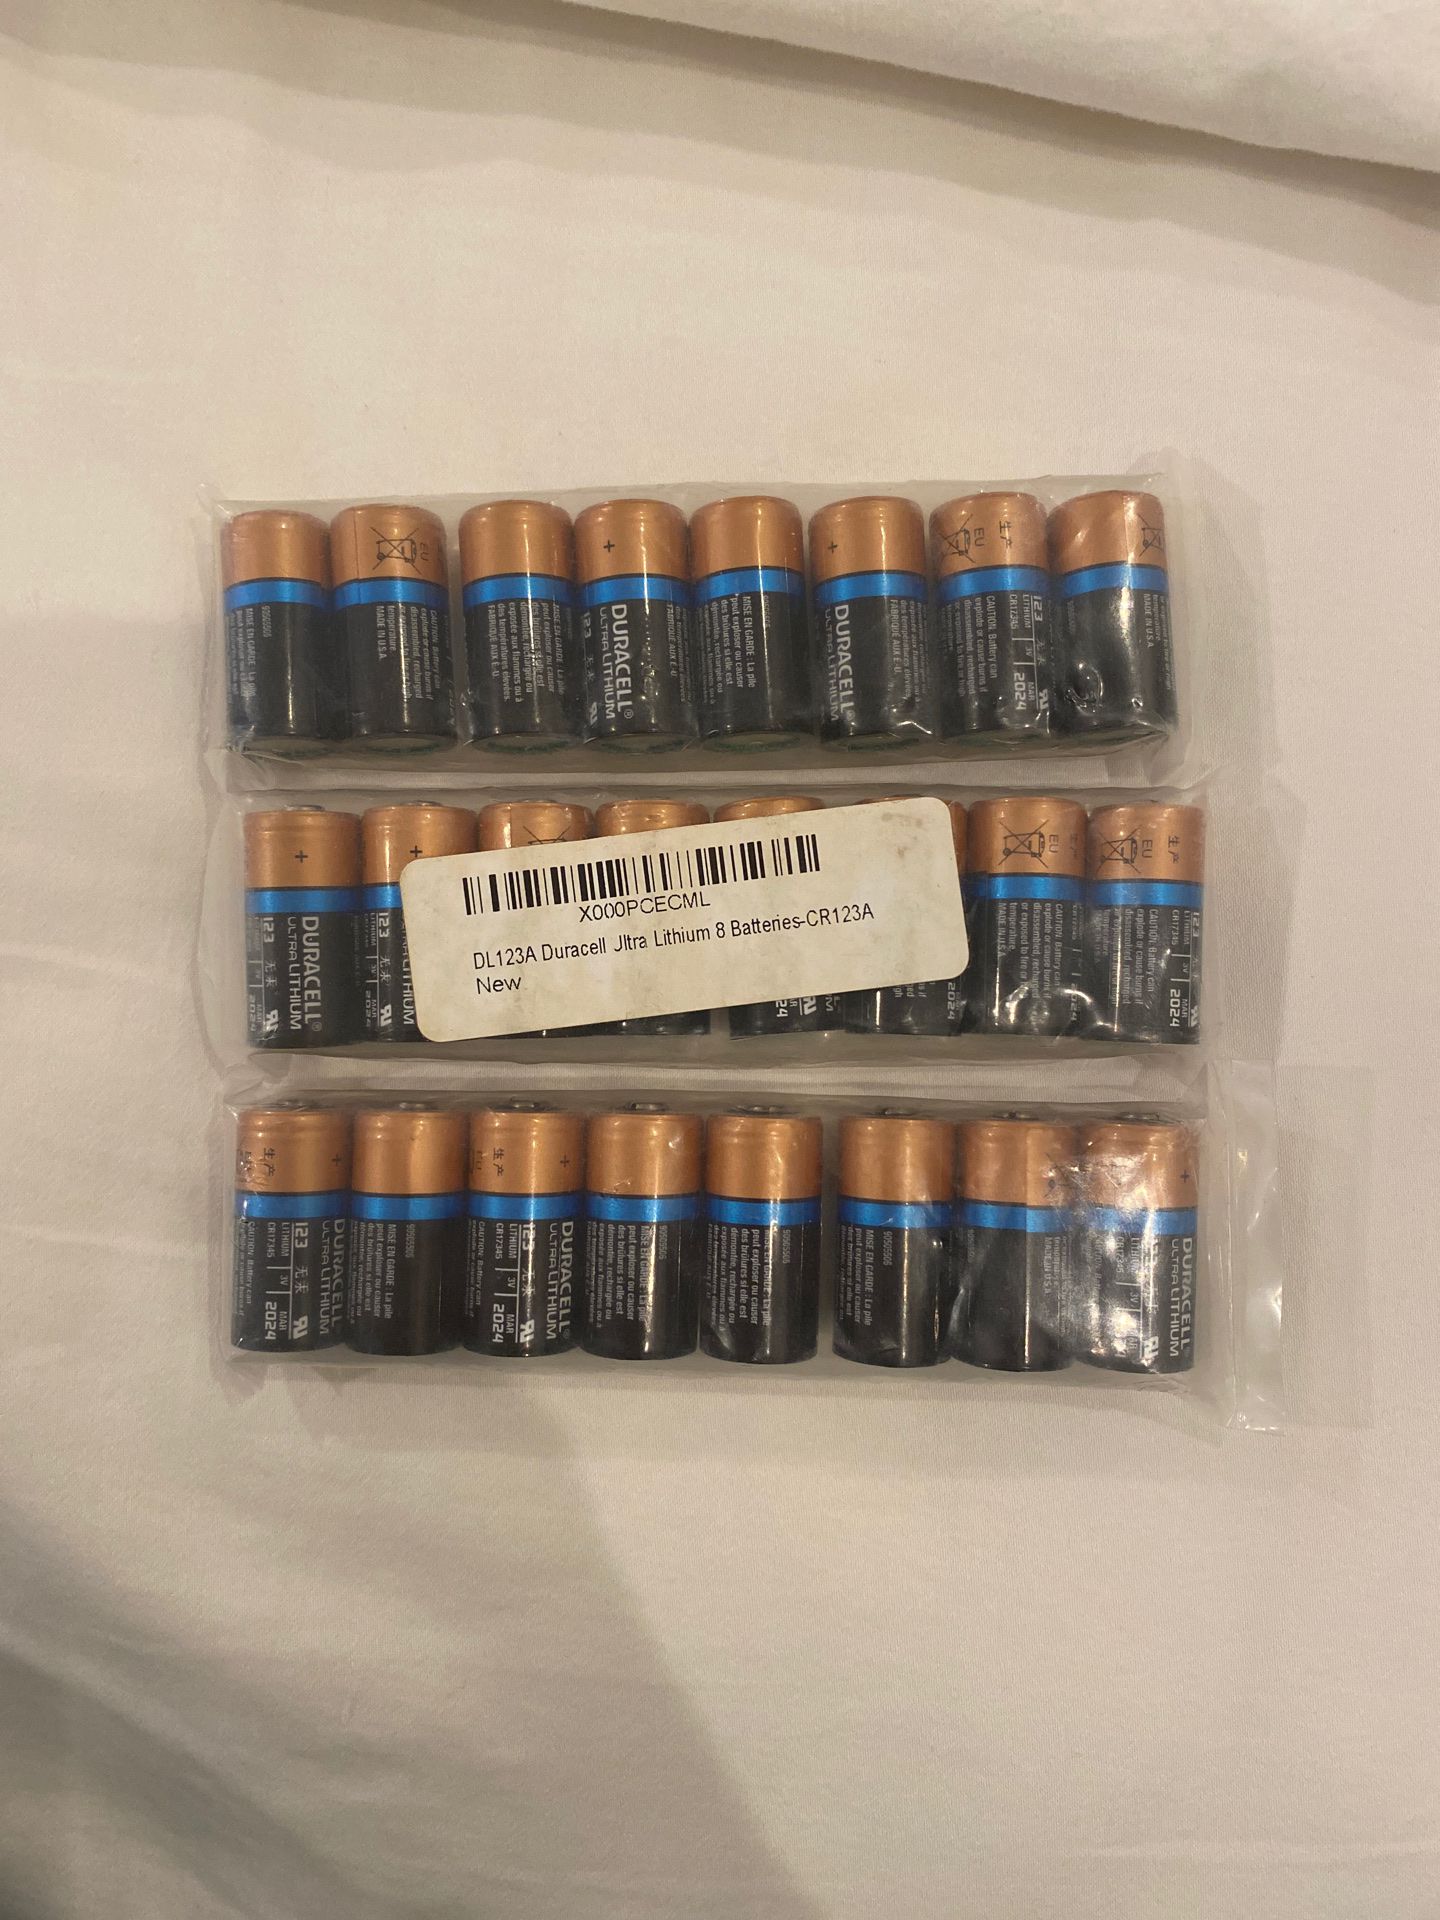 DL 123A Duracell ultra lithium 8 batteries